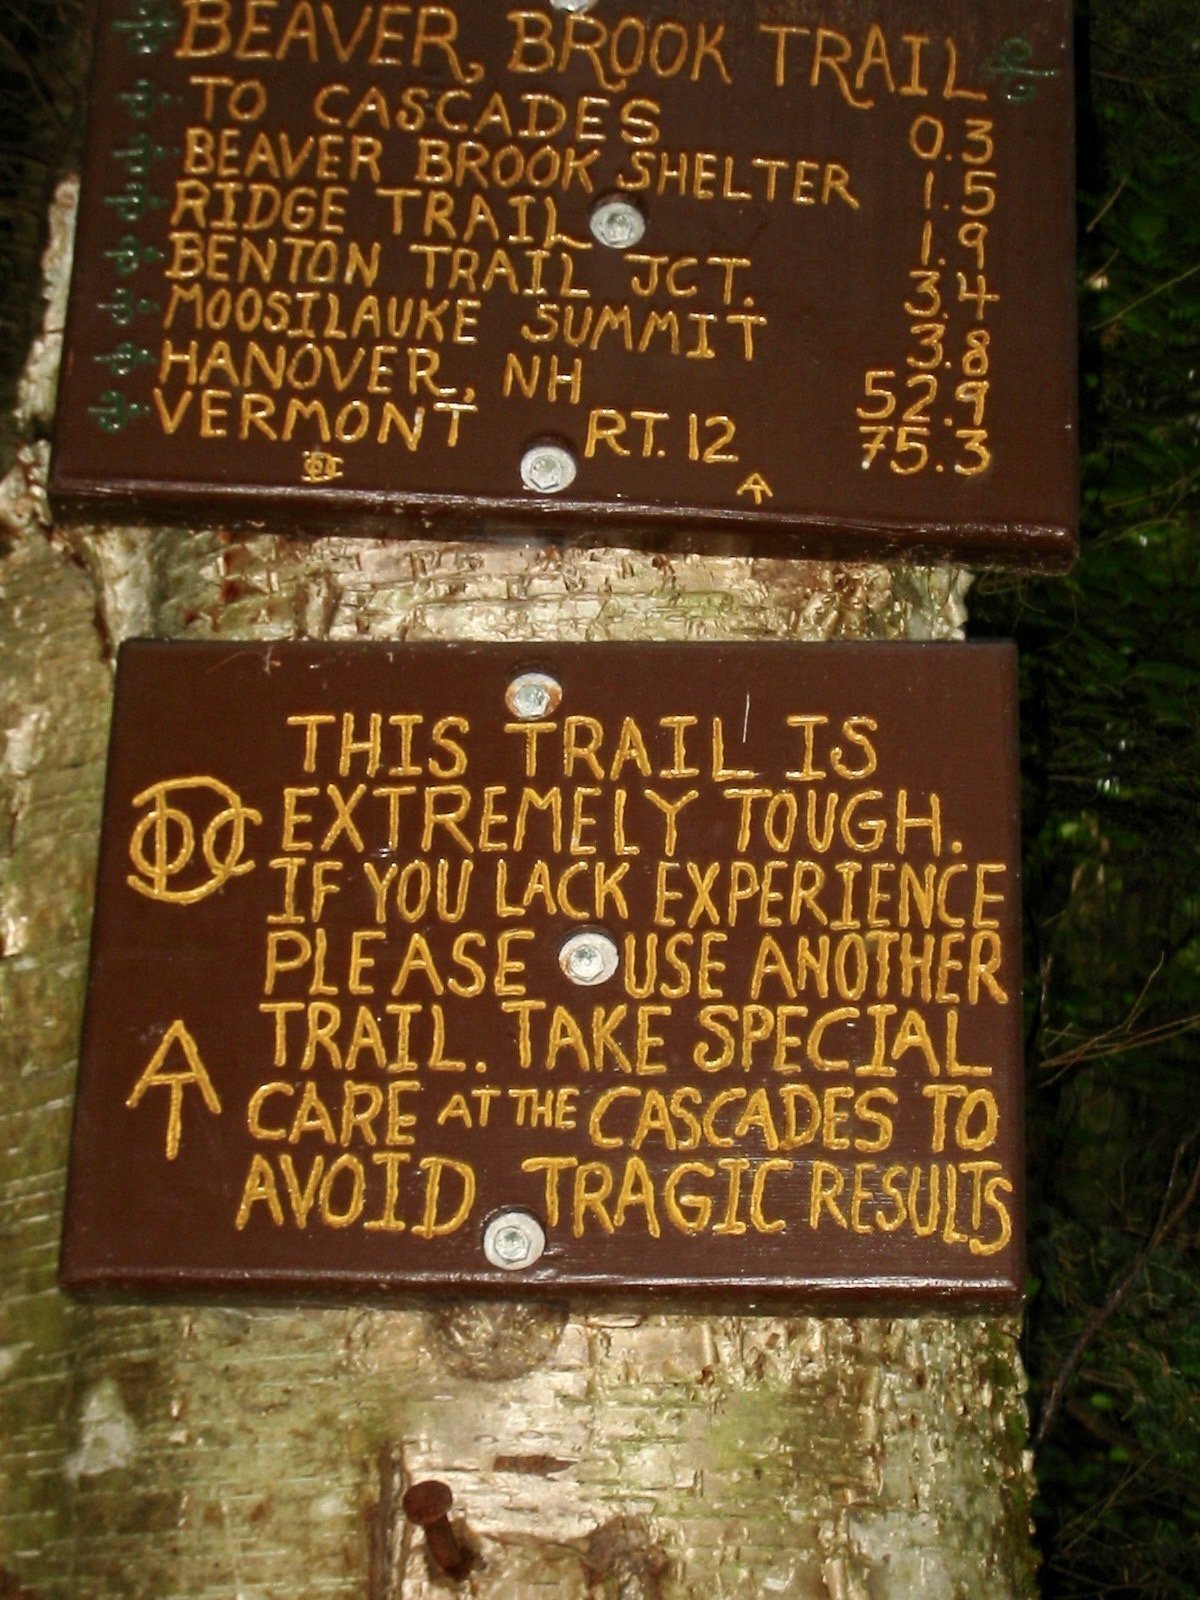 Beaver Brook warning sign